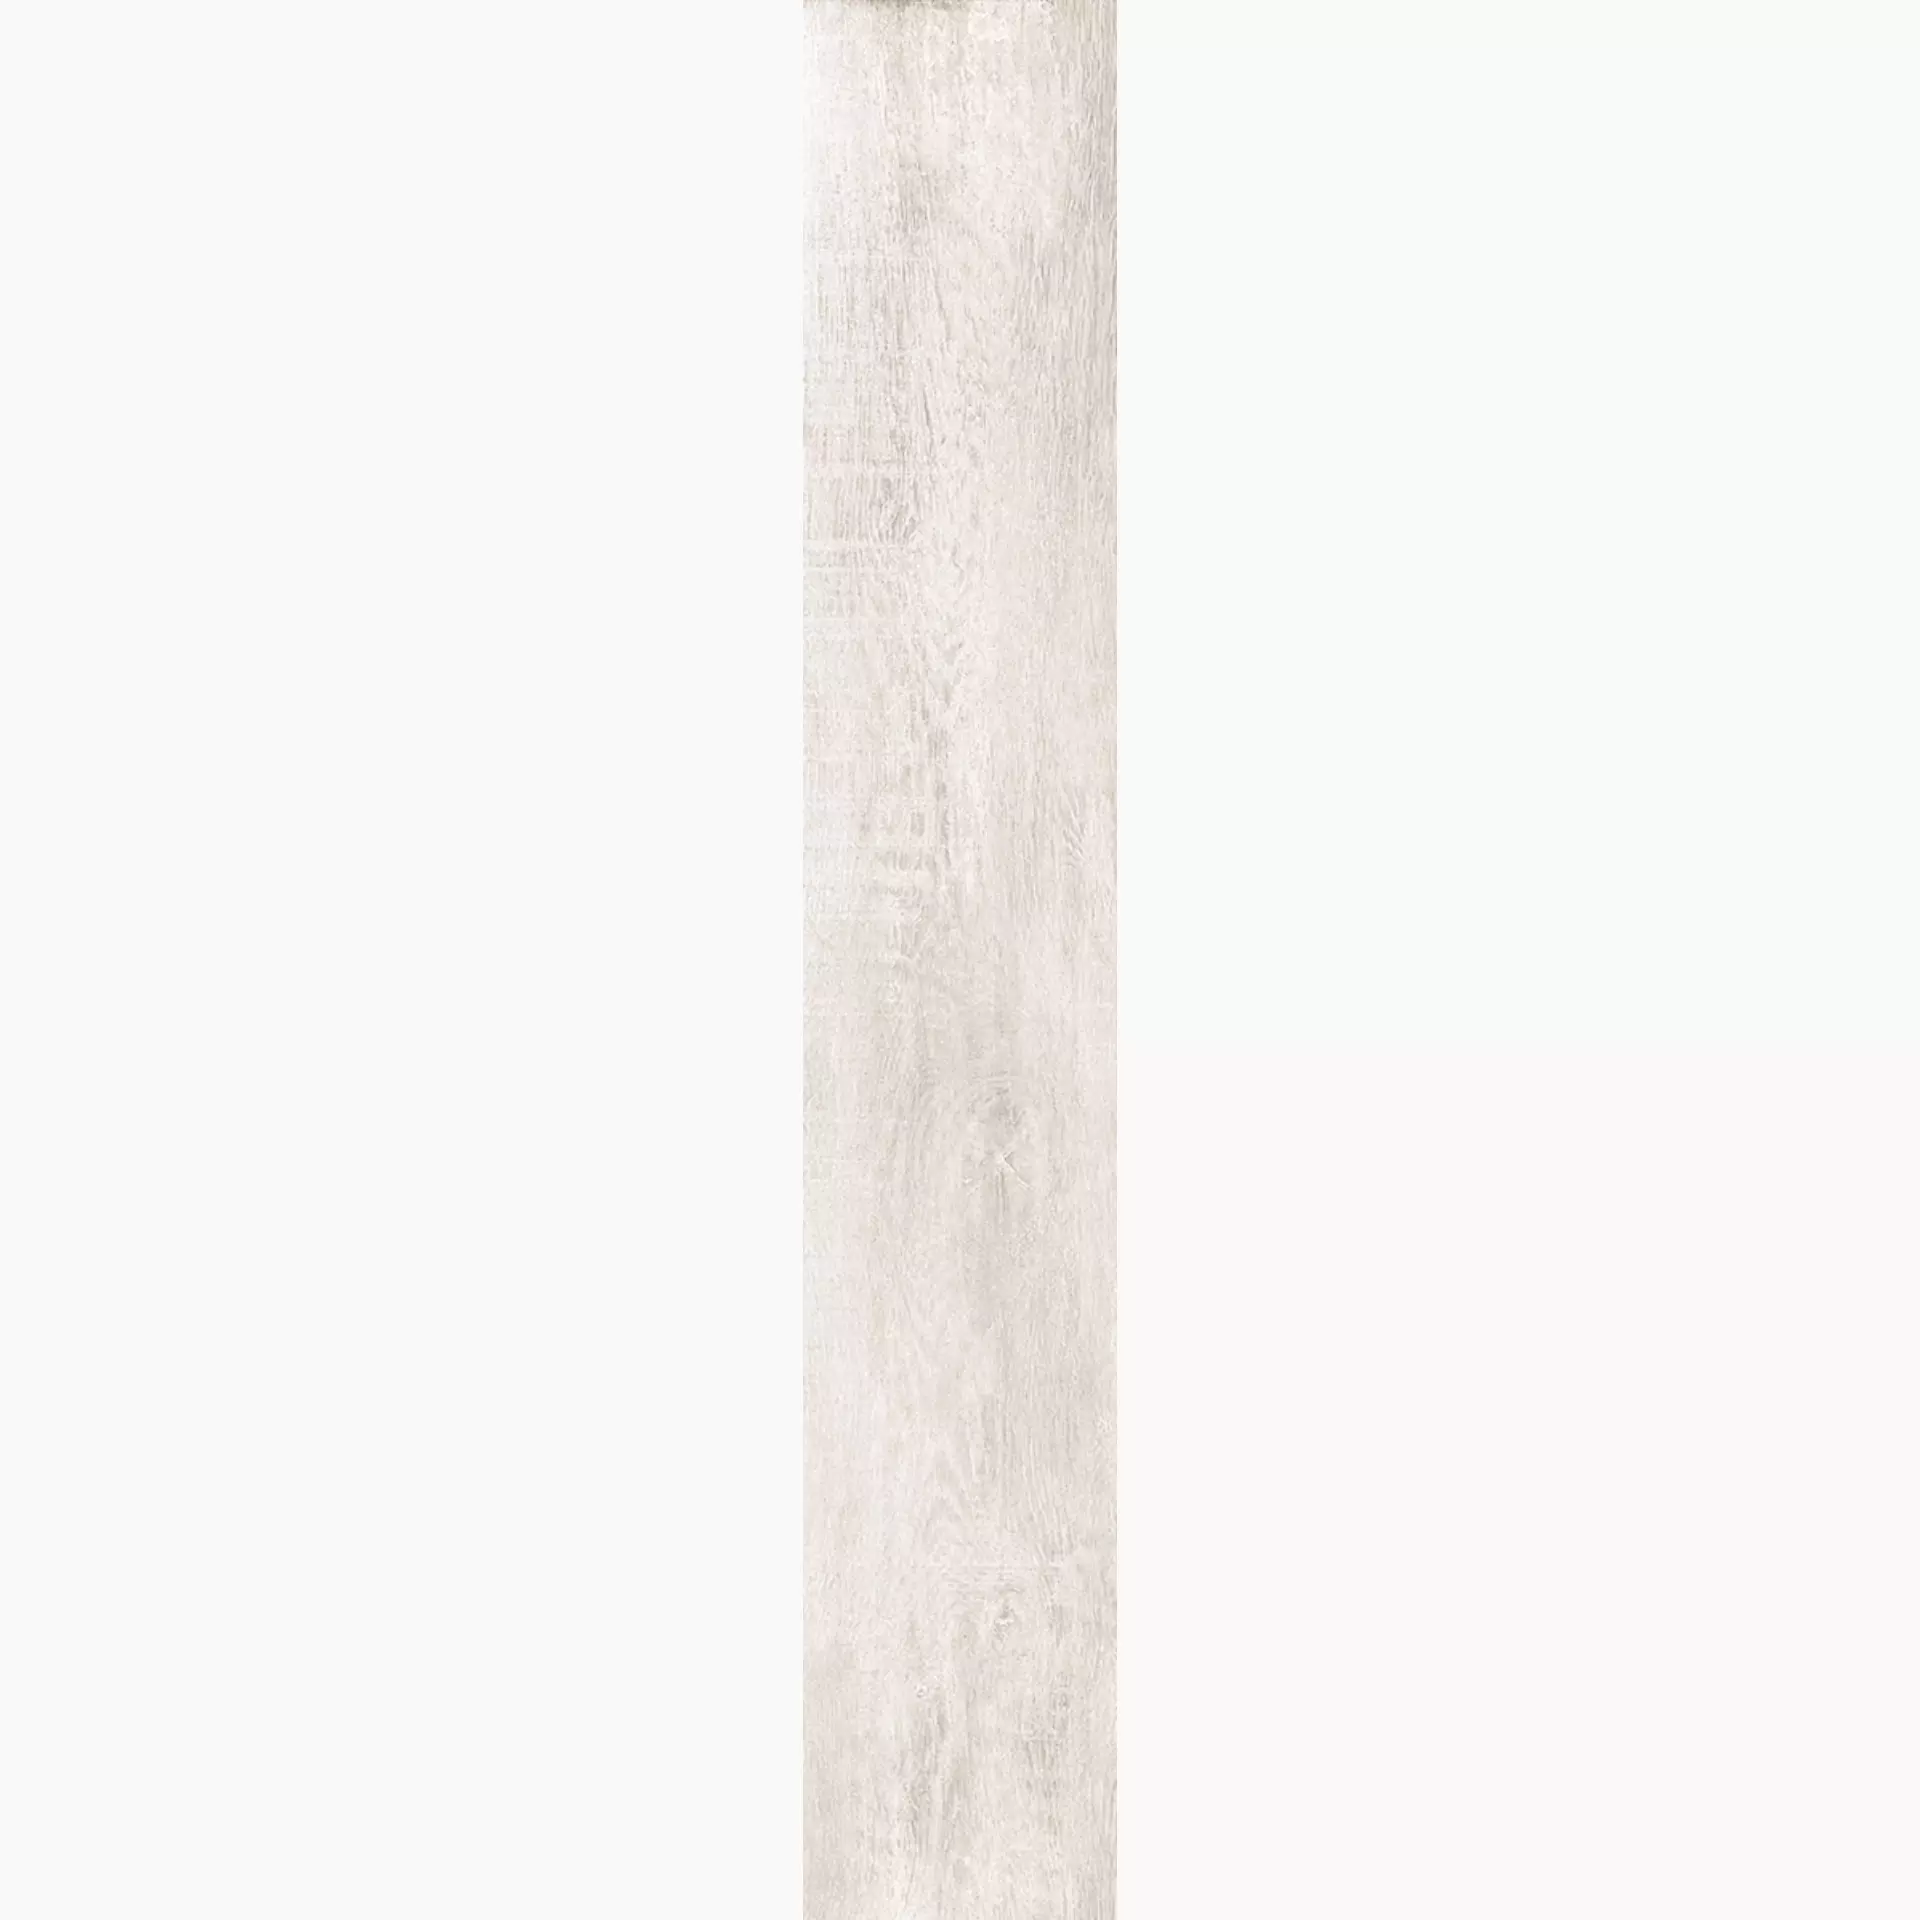 Rondine Greenwood Bianco Grip J87530 7,5x45cm 9,5mm